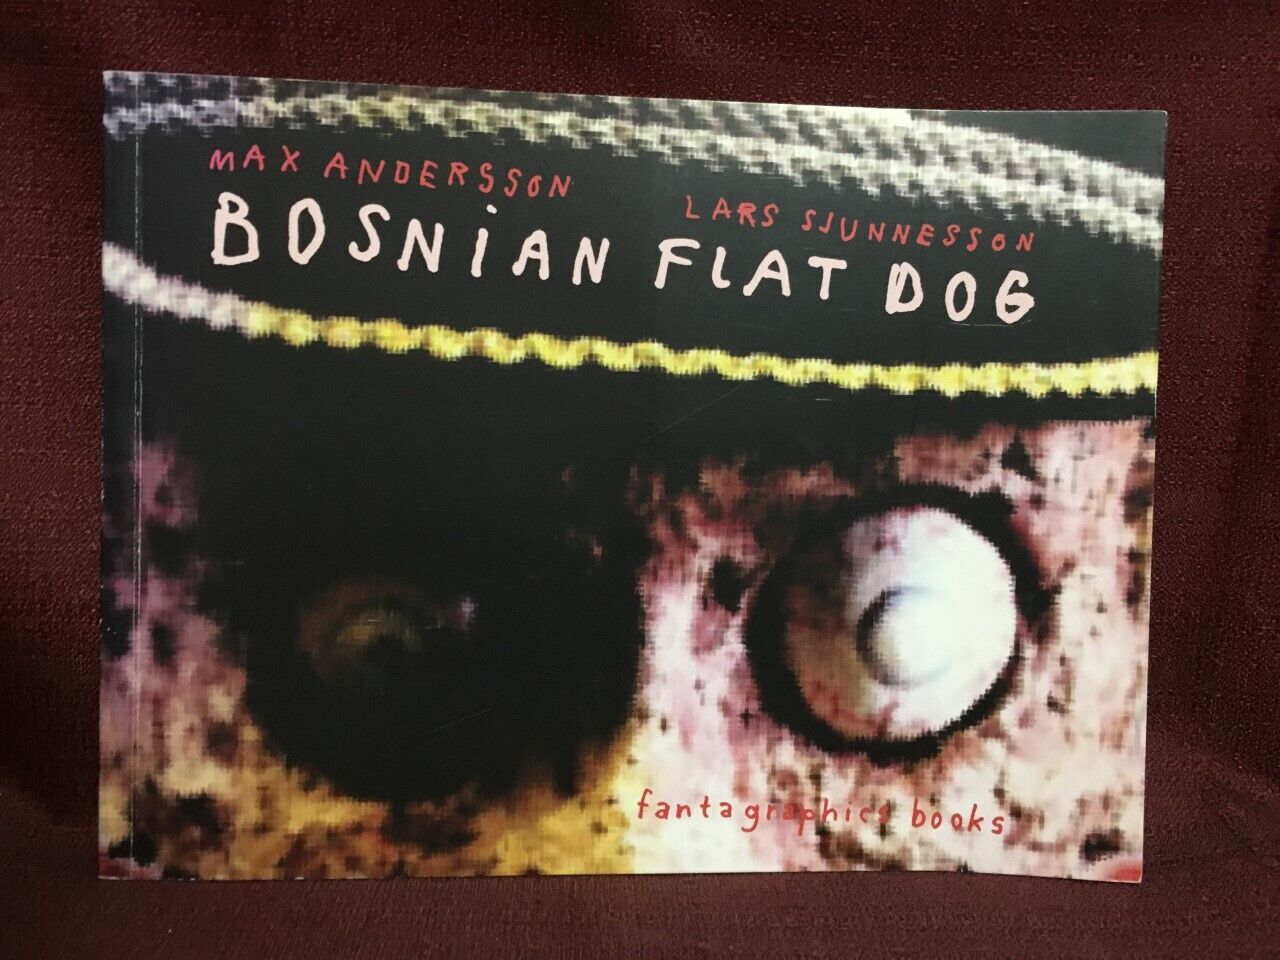 Bosnian Flat Dog Paperback Max Anderson Lars Sjunnesson Fantagraphics Books 